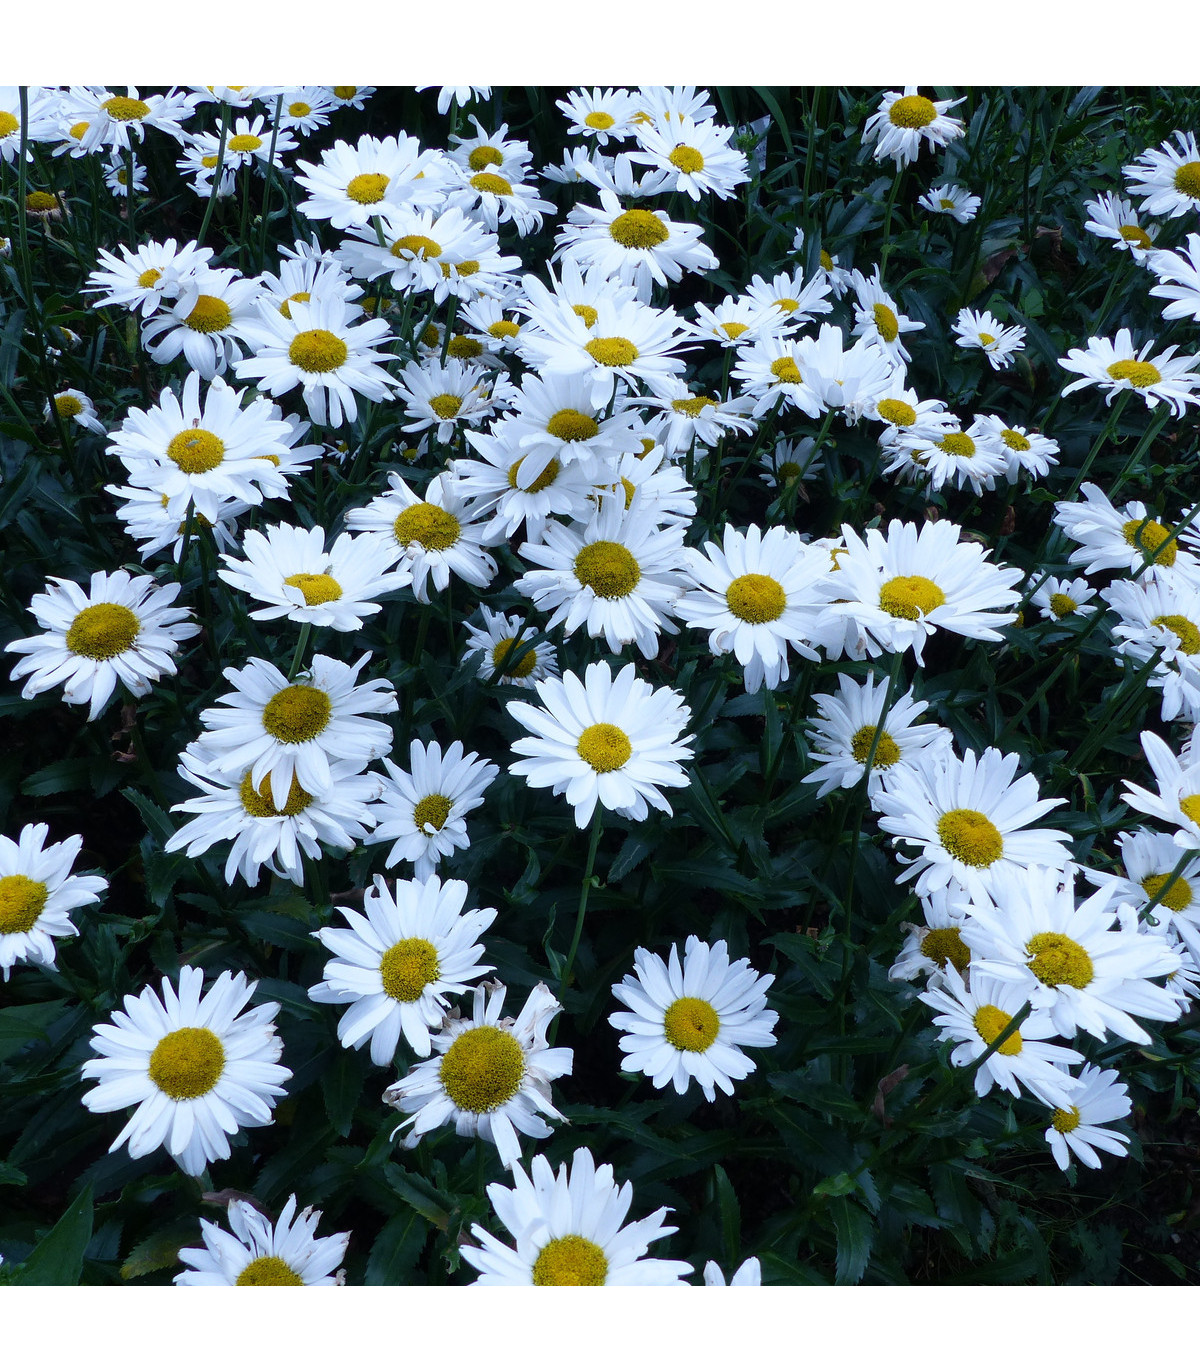 Kopretina bílá - Chrysanthemum leucanthemum max. - osivo kopretiny - 200 ks